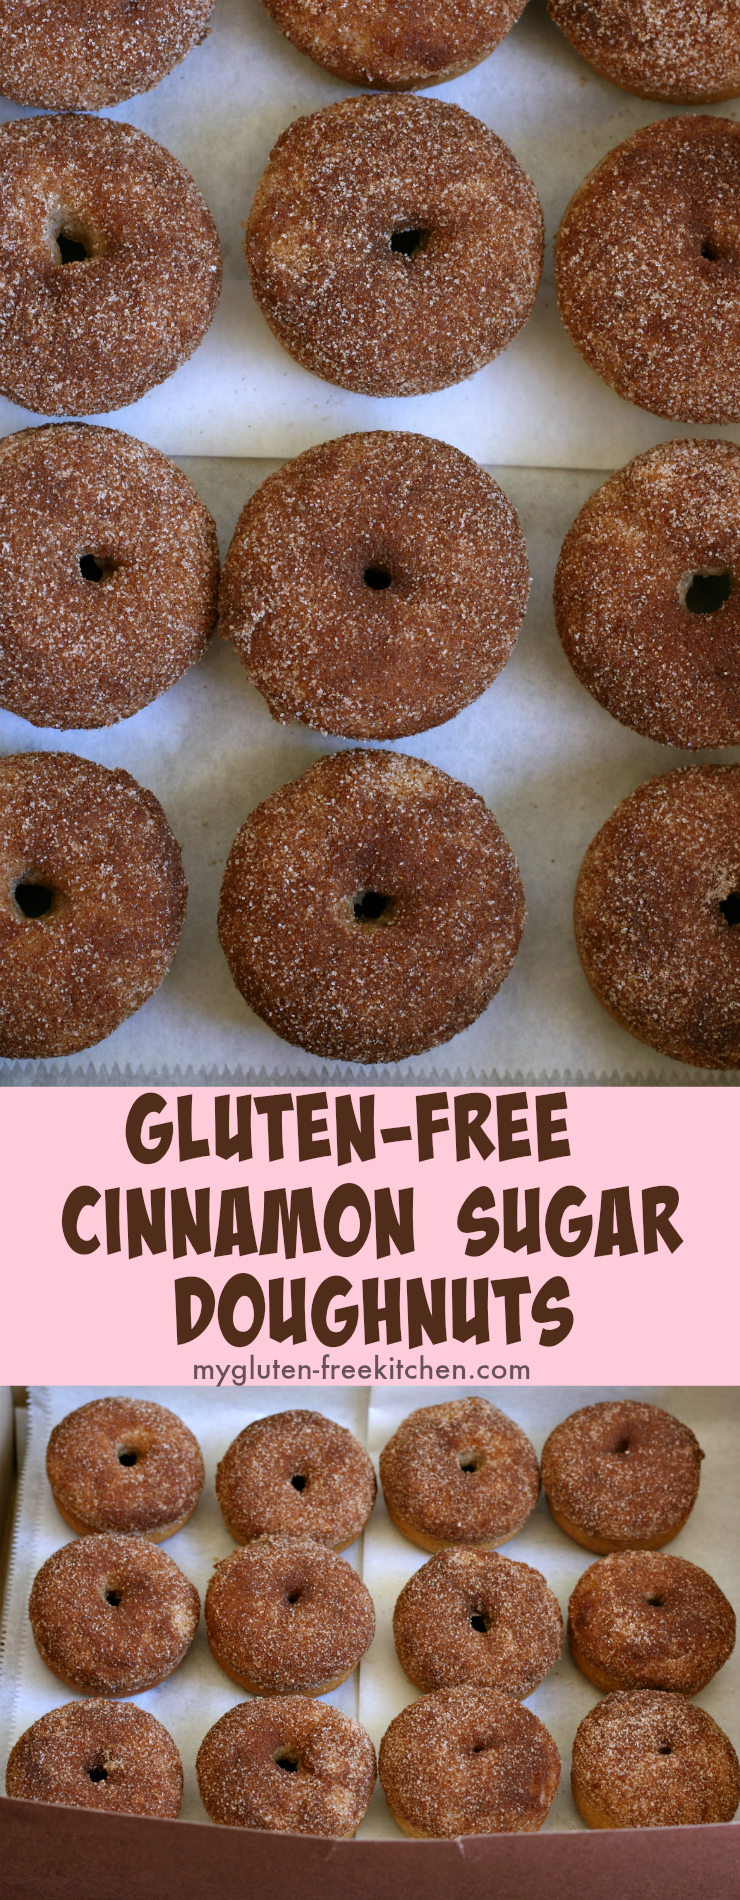 Gluten-free Cinnamon Sugar Doughnuts Donuts recipe. #glutenfreerecipe